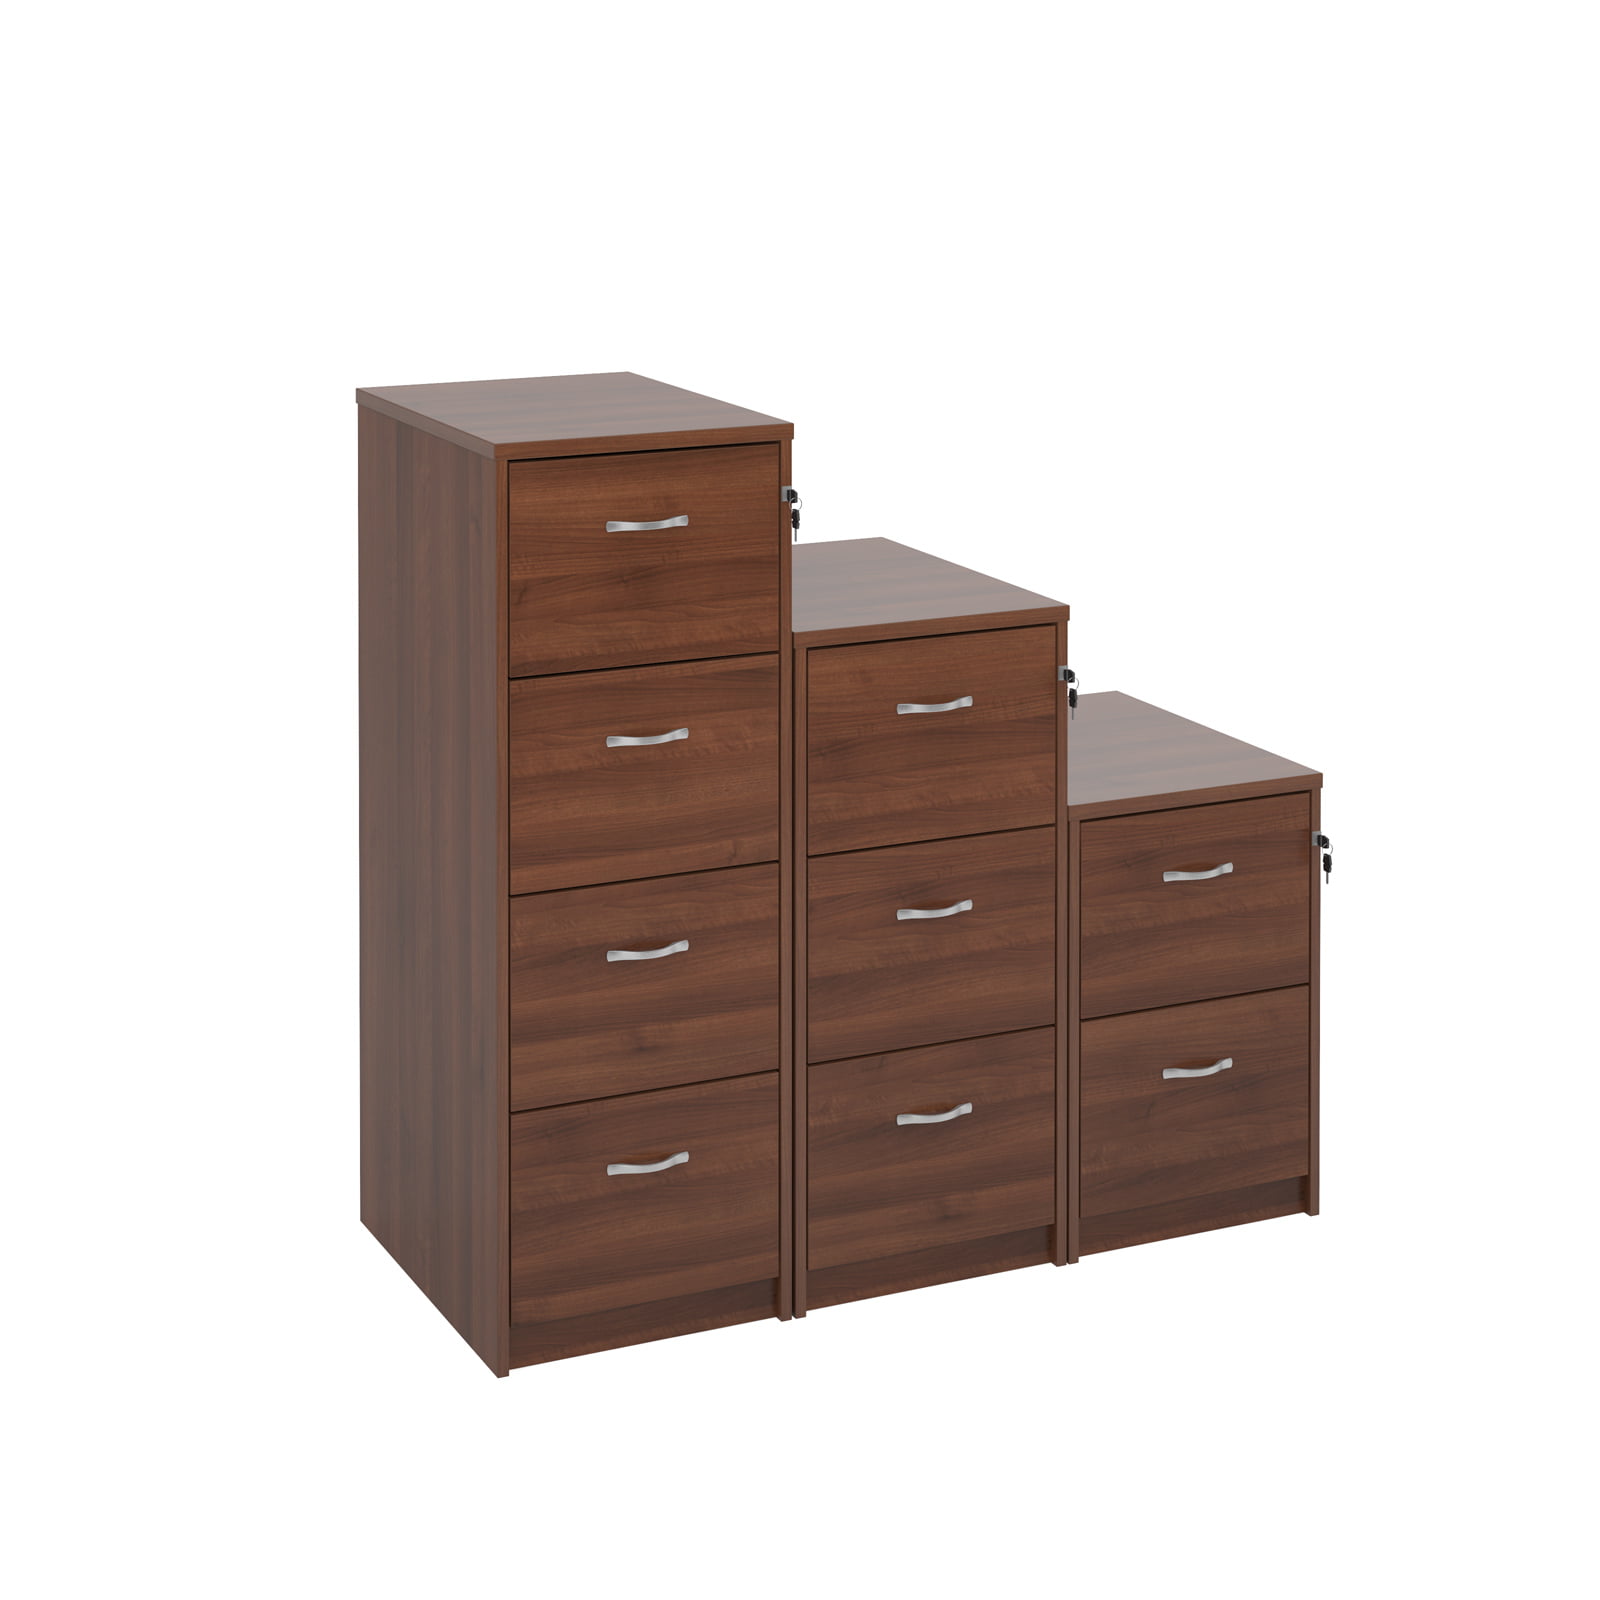 Wooden filing cabinets uk